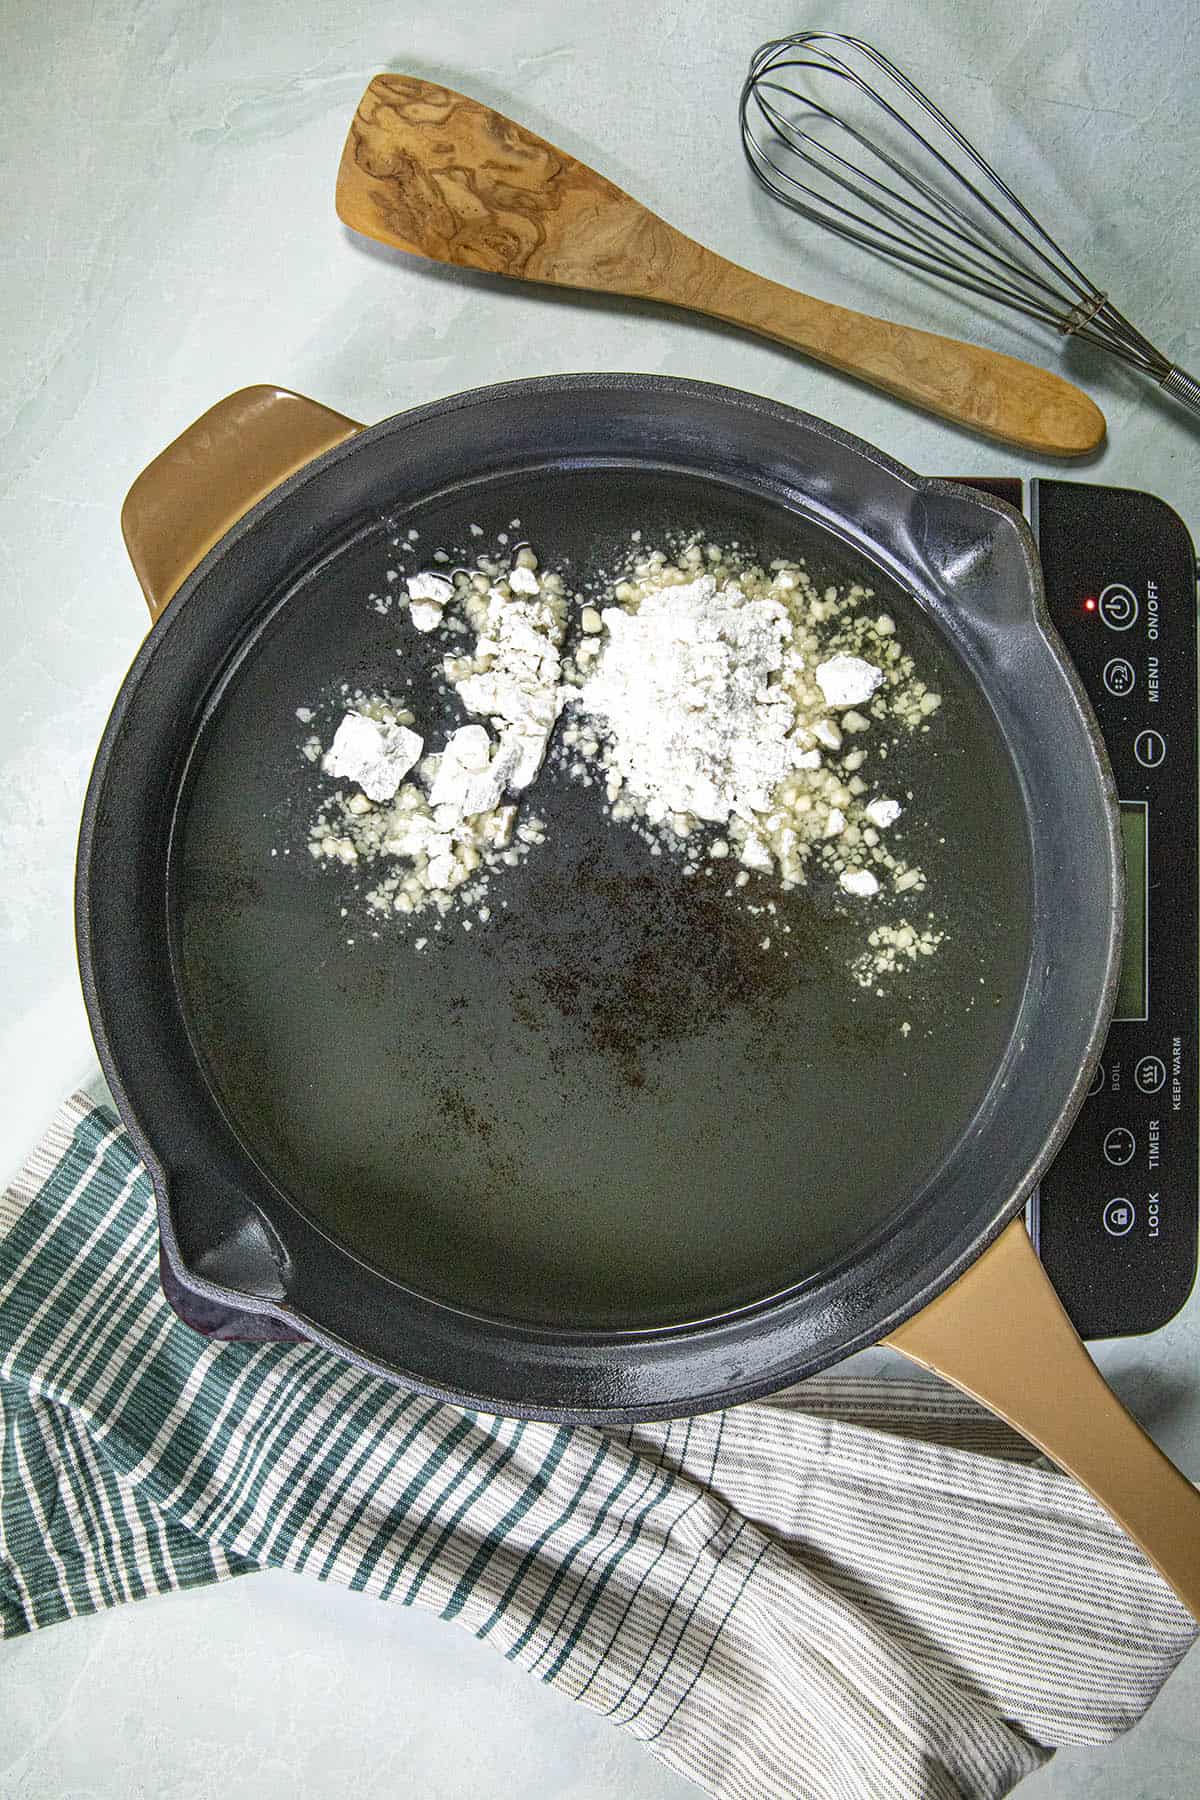 Adding flour and oil to a pan to make roux